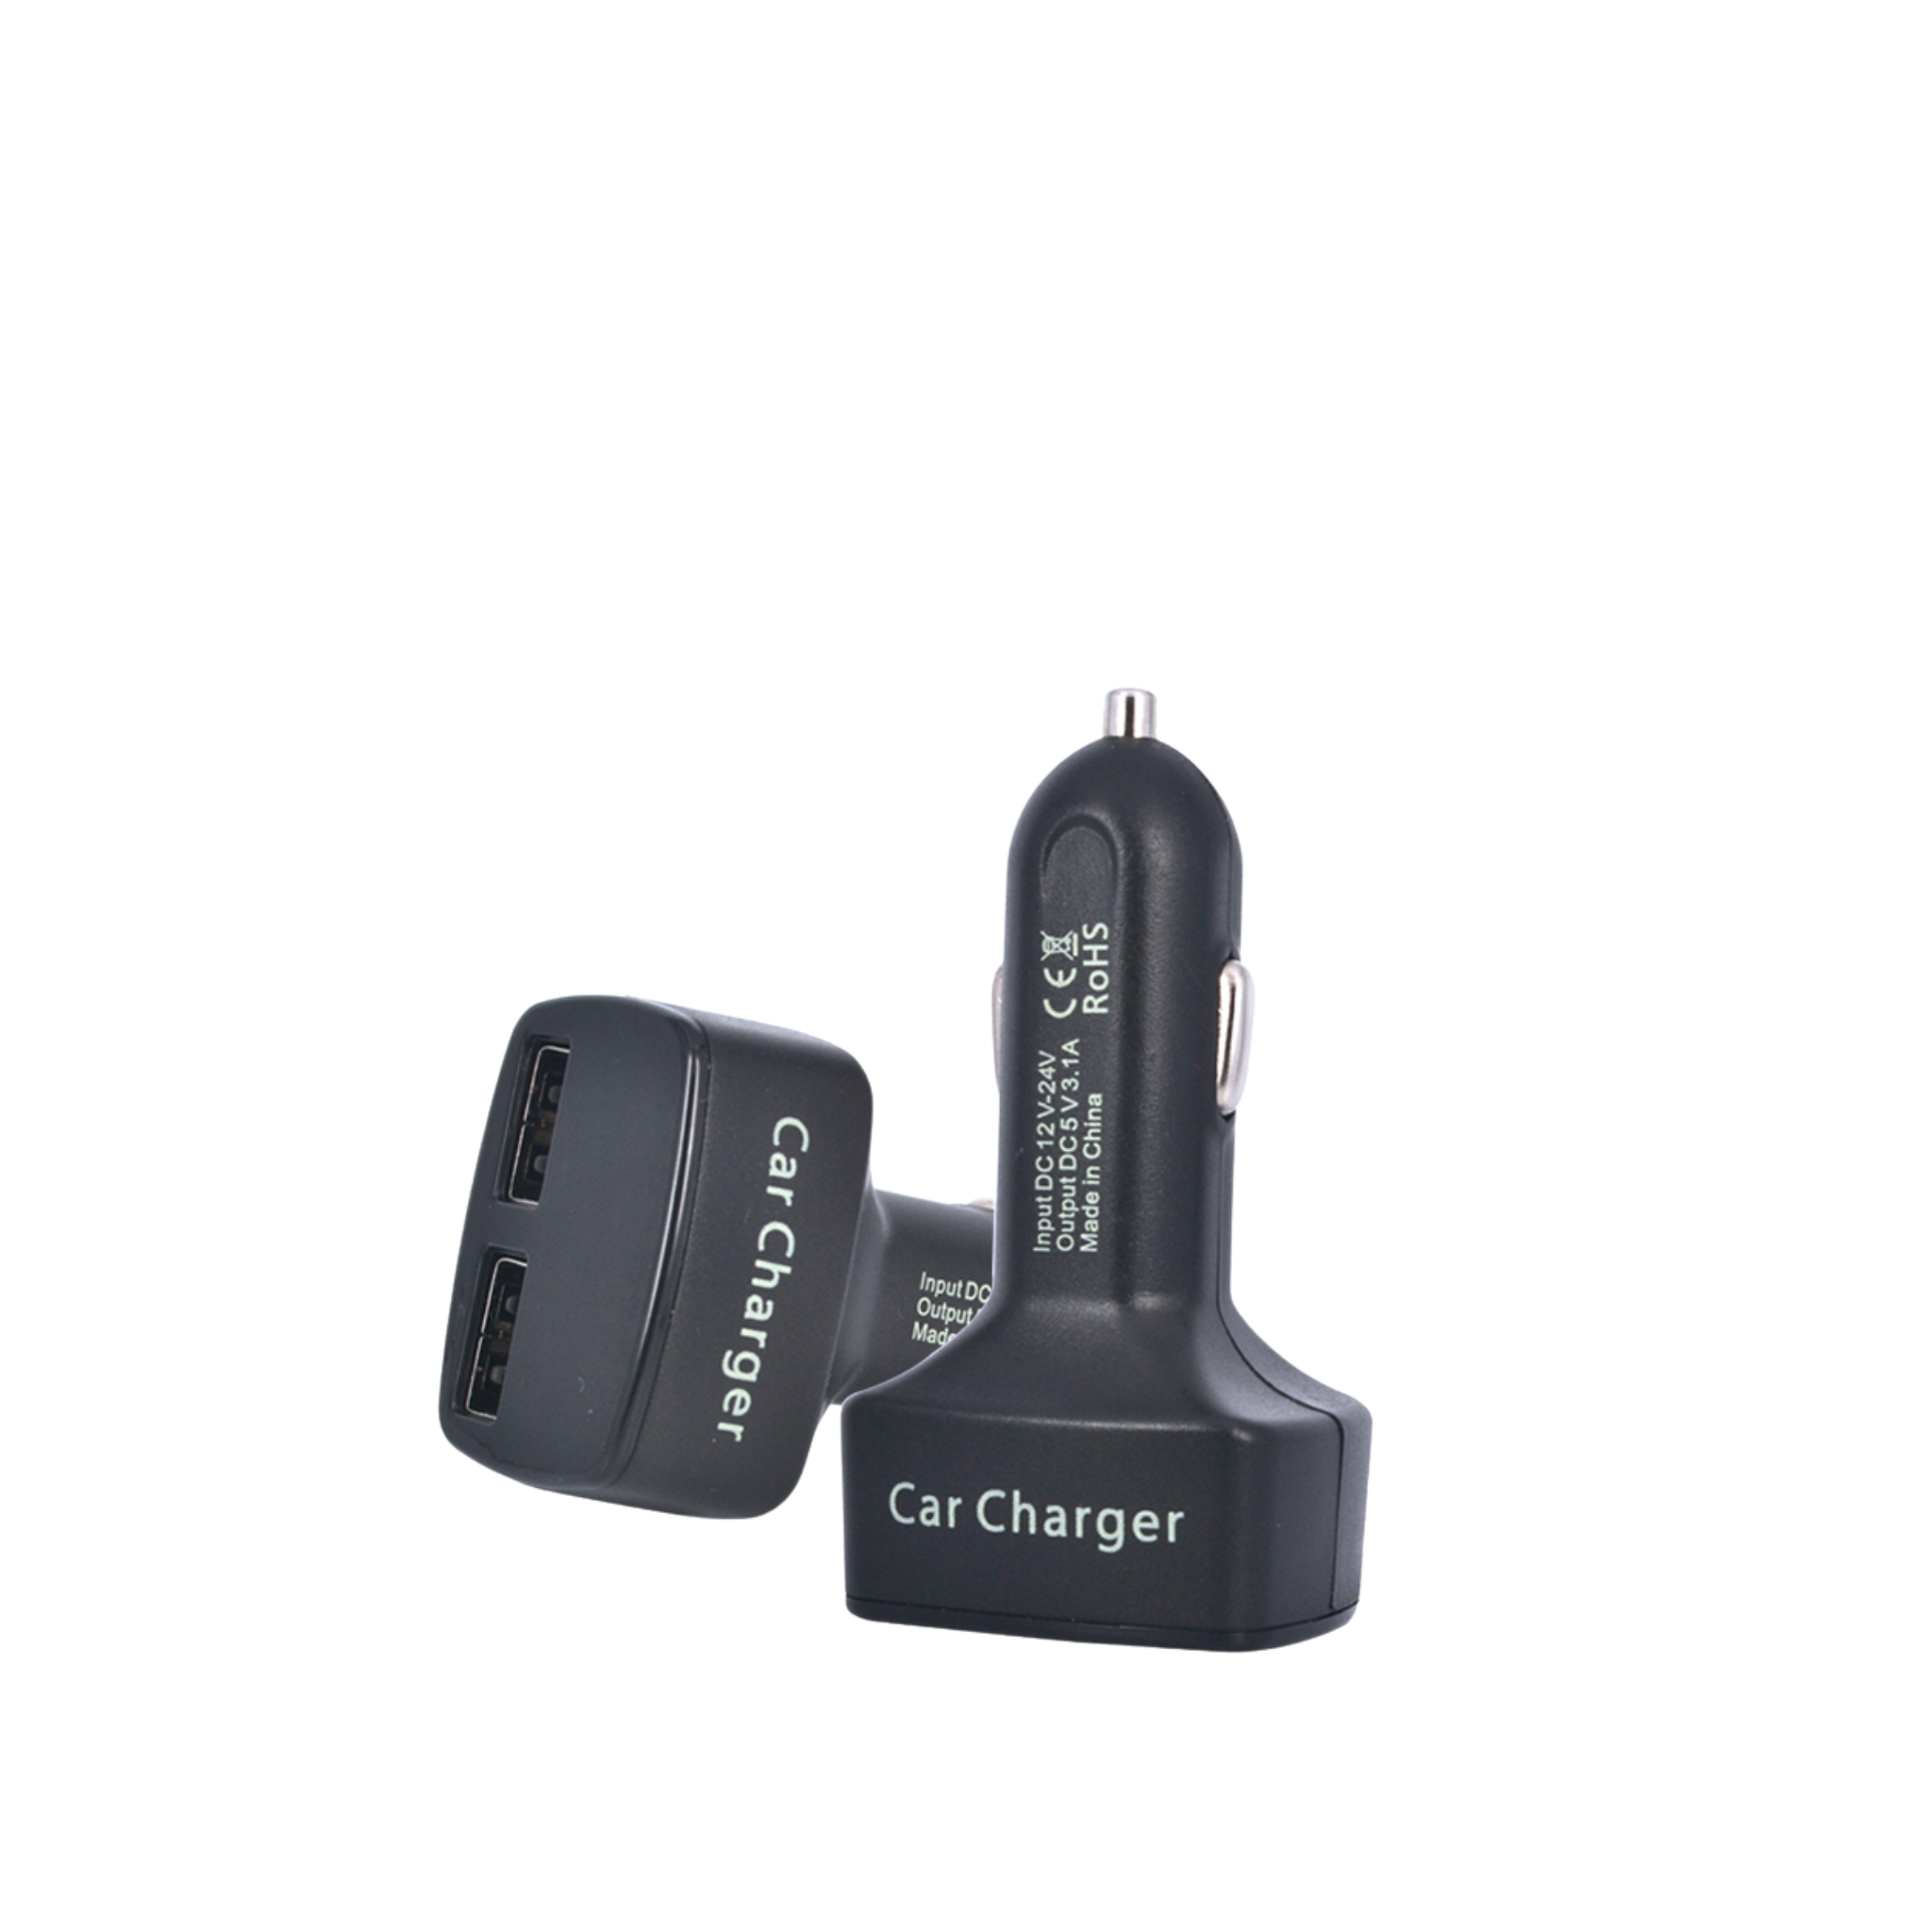 Car Charger, Led Screen Display, Dual USB Port